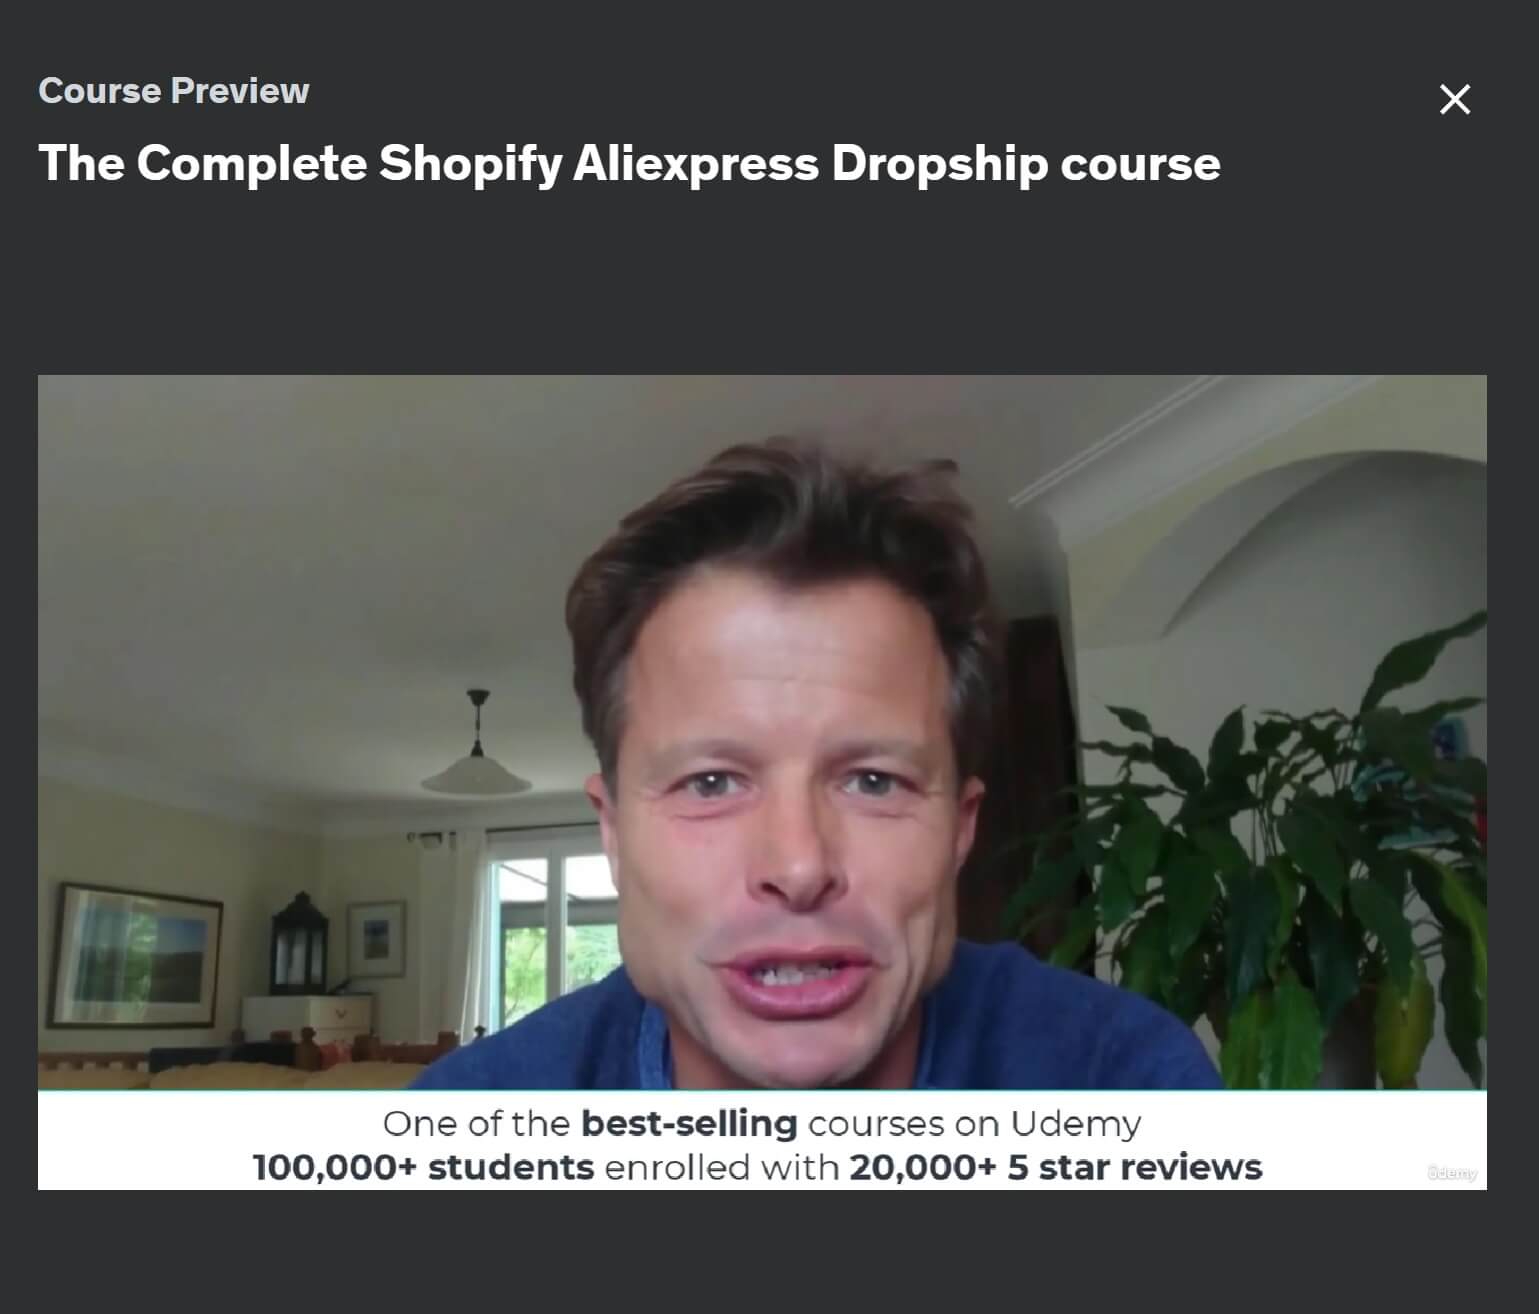 Vista previa completa del curso Shopify Aliexpress Dropship